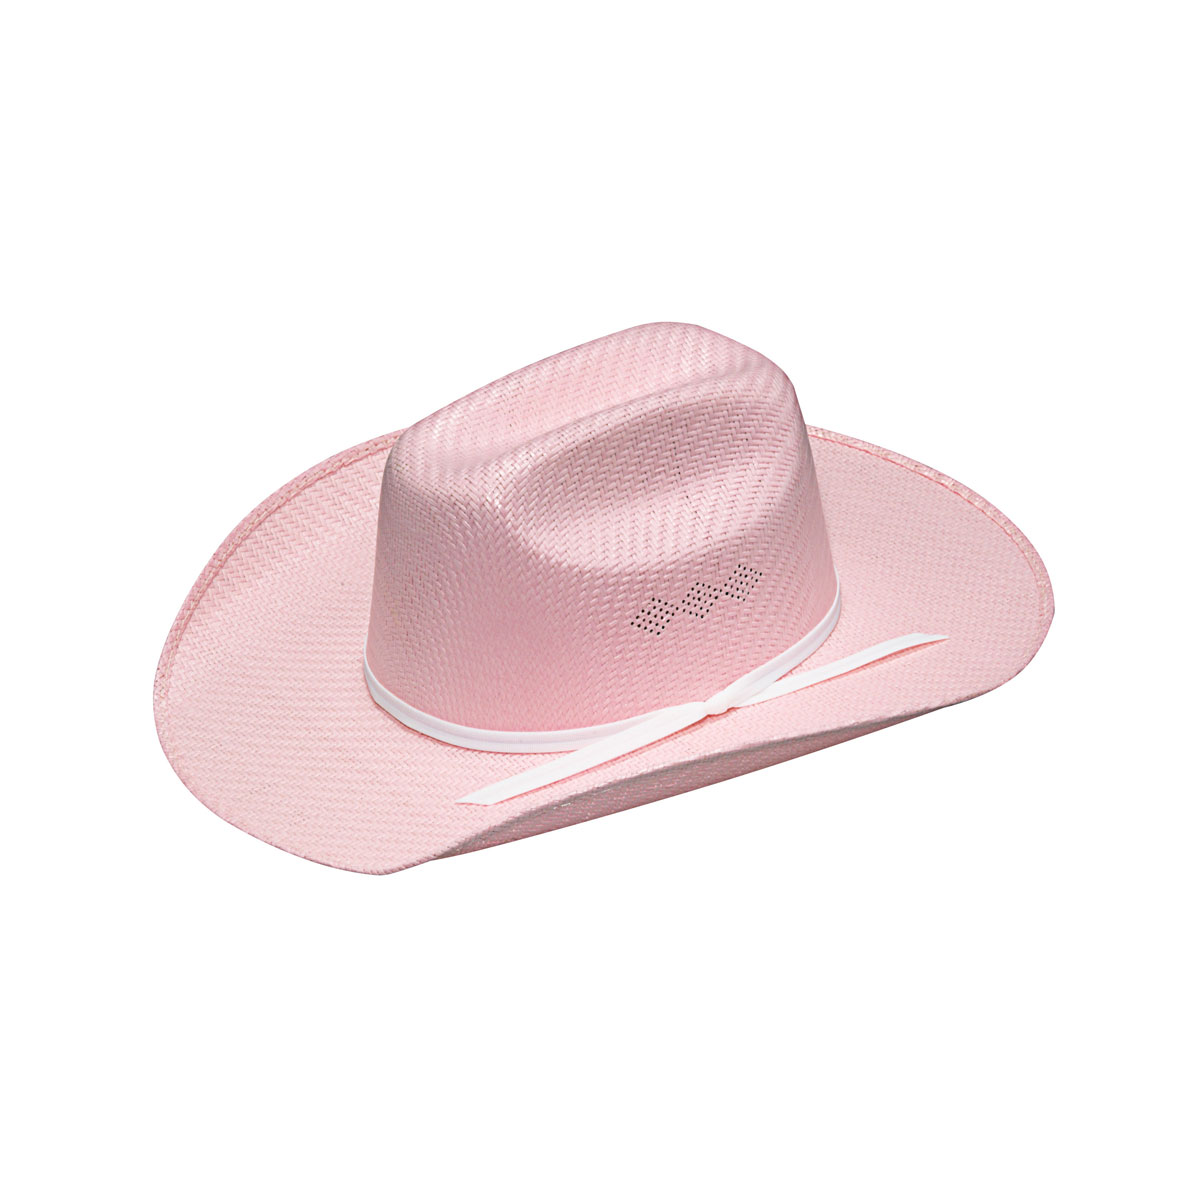 Twister Youth Straw Cowboy Hat - Pink